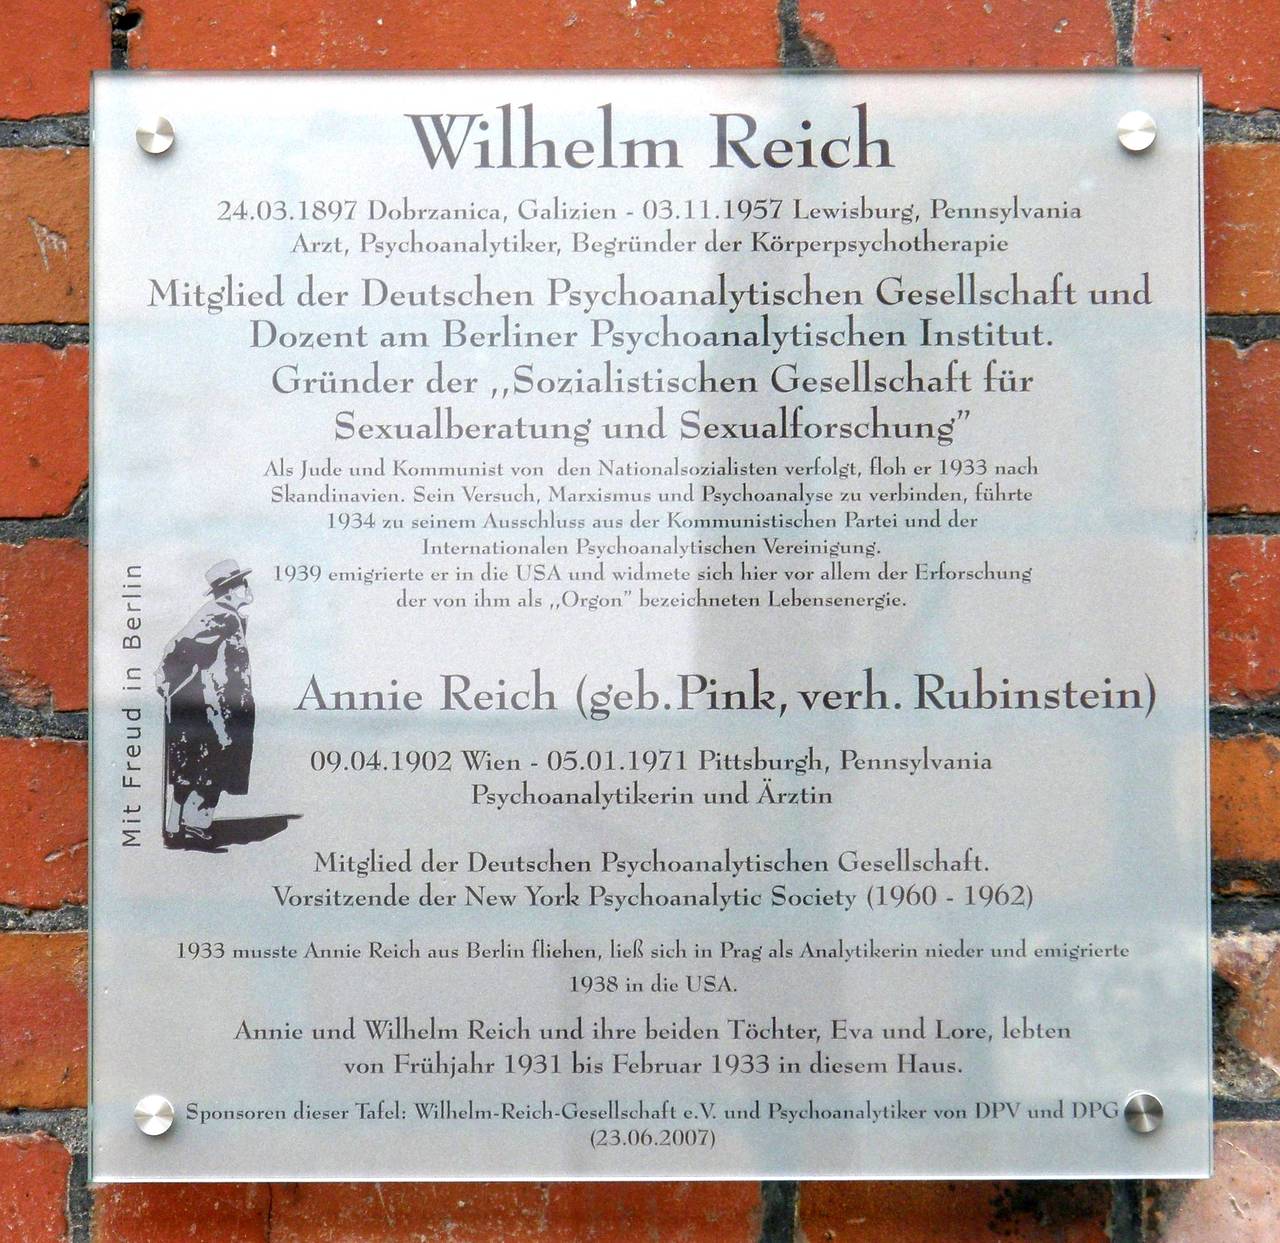 Wilhelm Reich. By Axel Mauruszat (Own work) [Attribution], via Wikimedia Commons